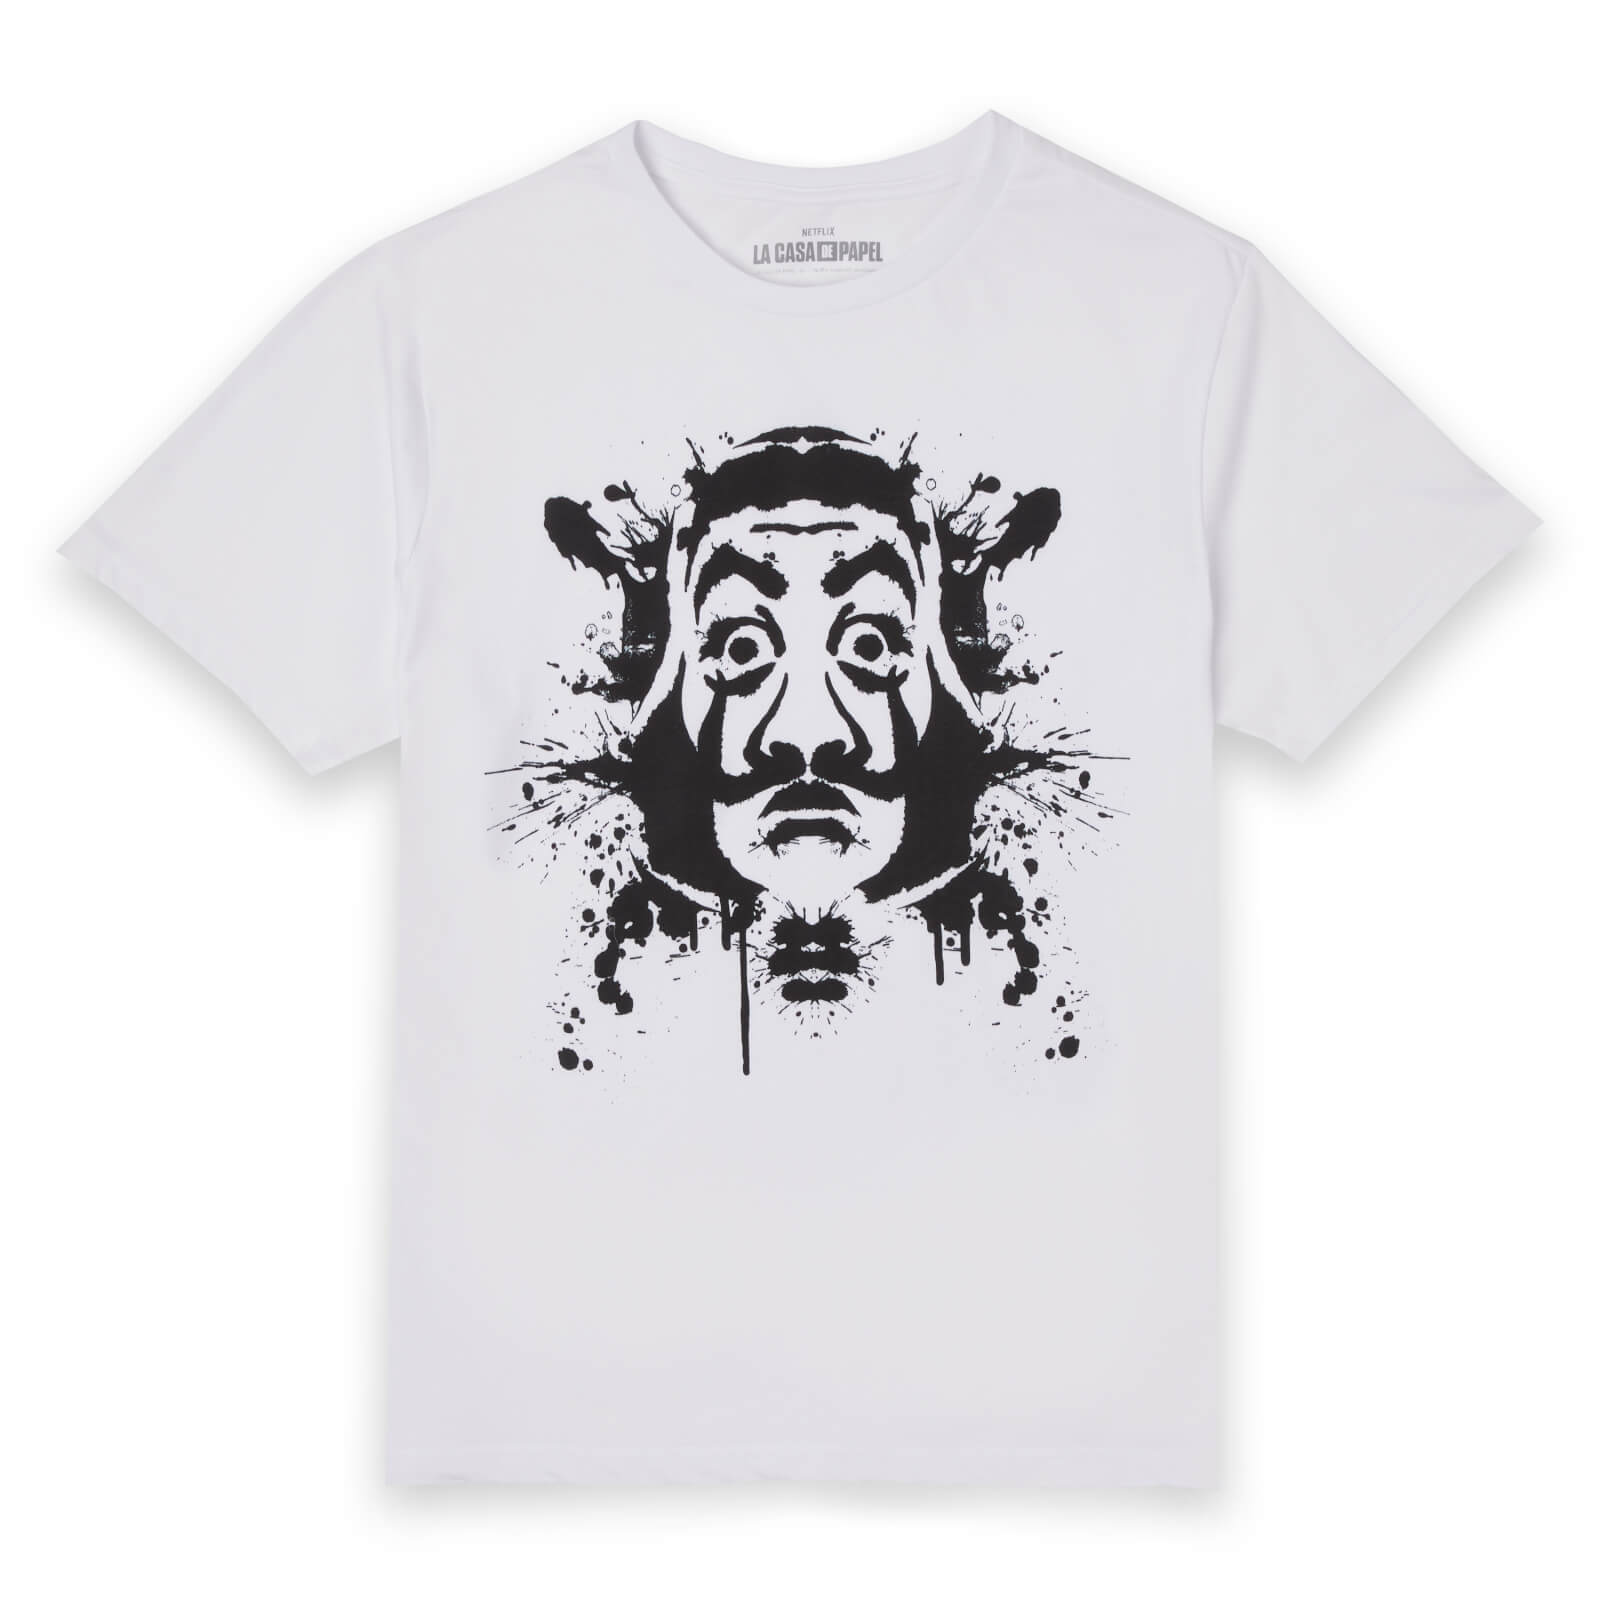 Money Heist Dali Mask Paint Splatter Unisex T-Shirt - White - S - White